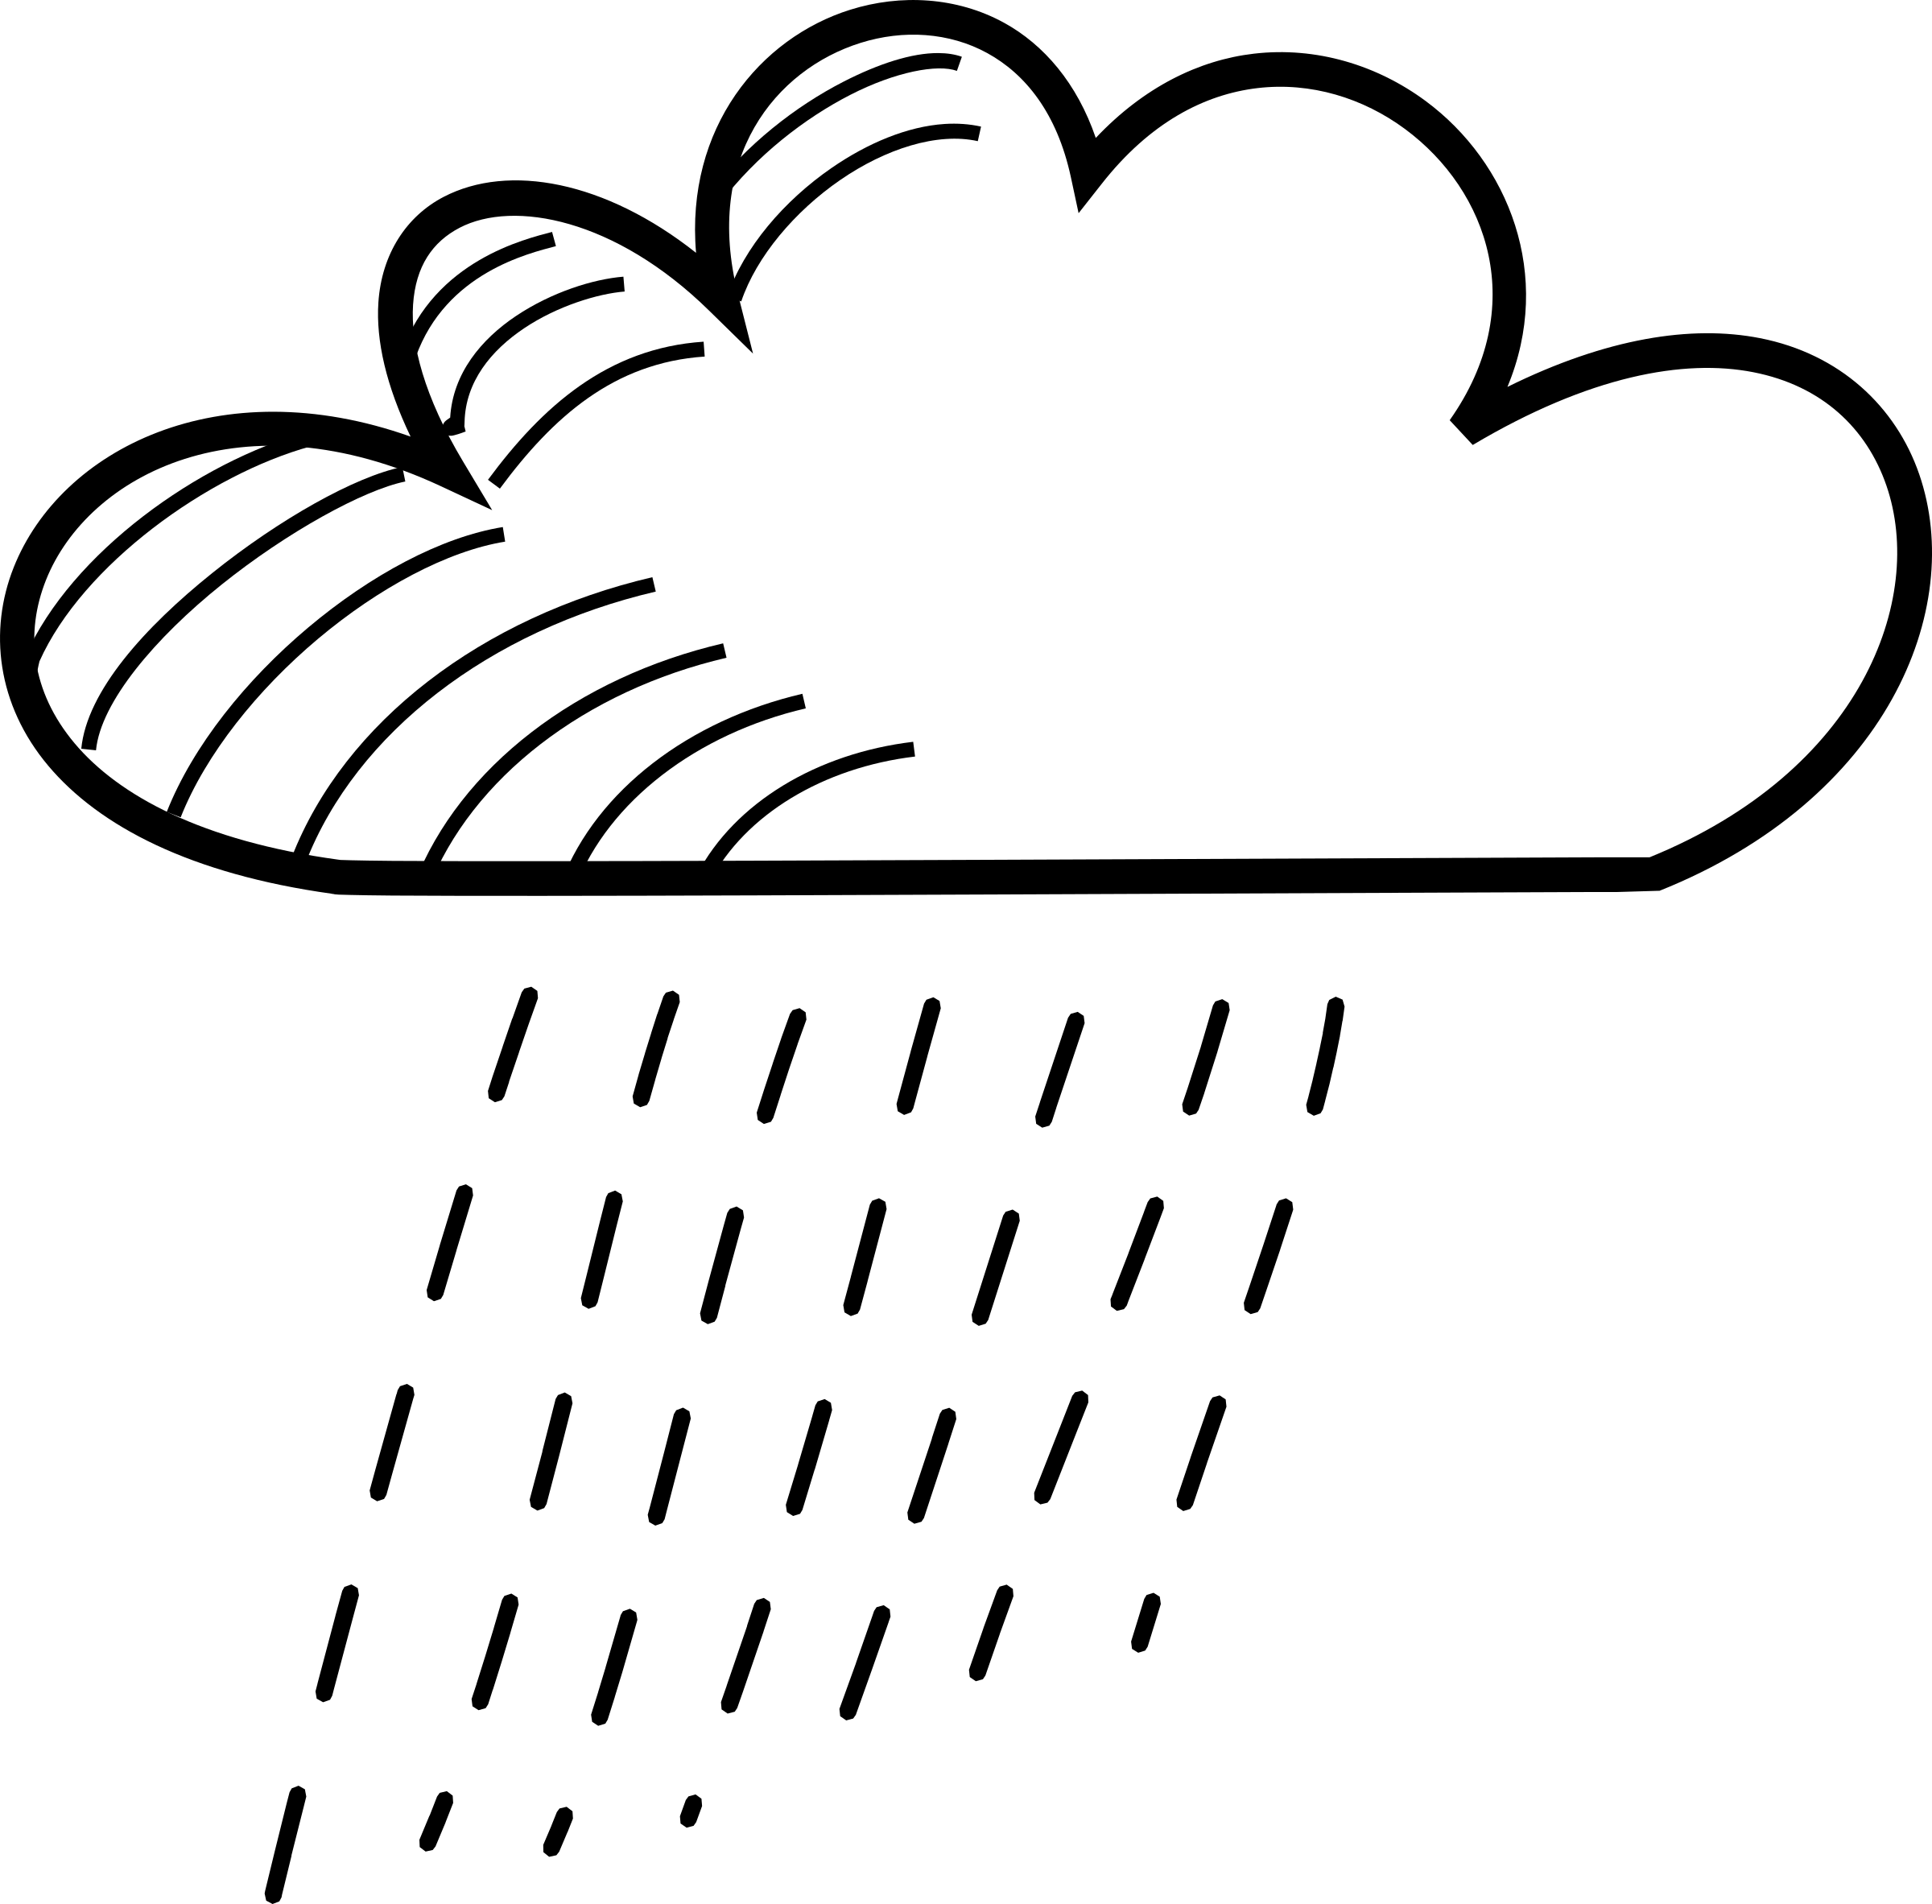 Wednesday clipart rainy. Stick figure cloud icons